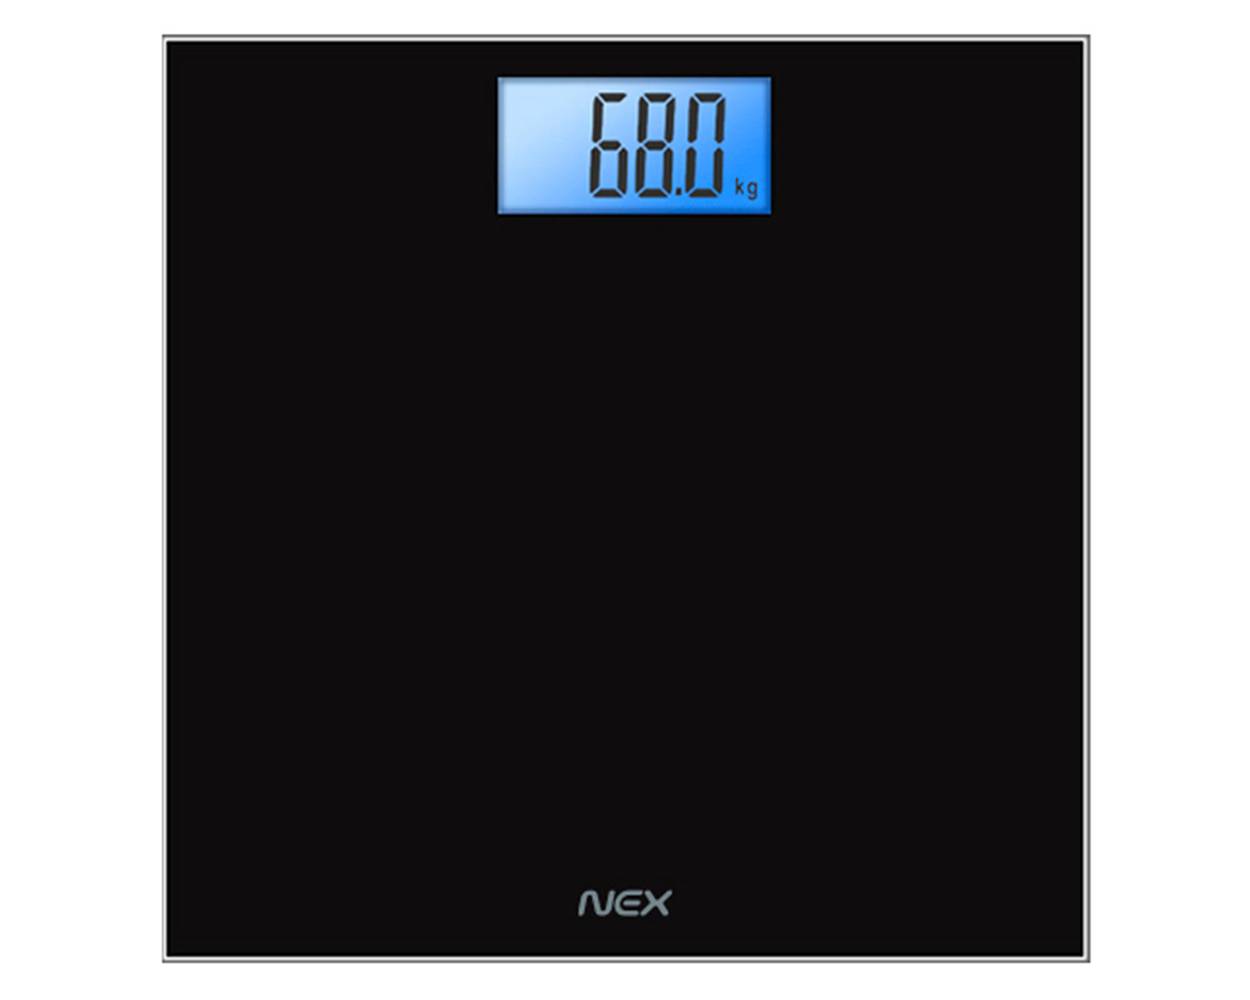 Nex balanza digital eb150121 negro (1 u)